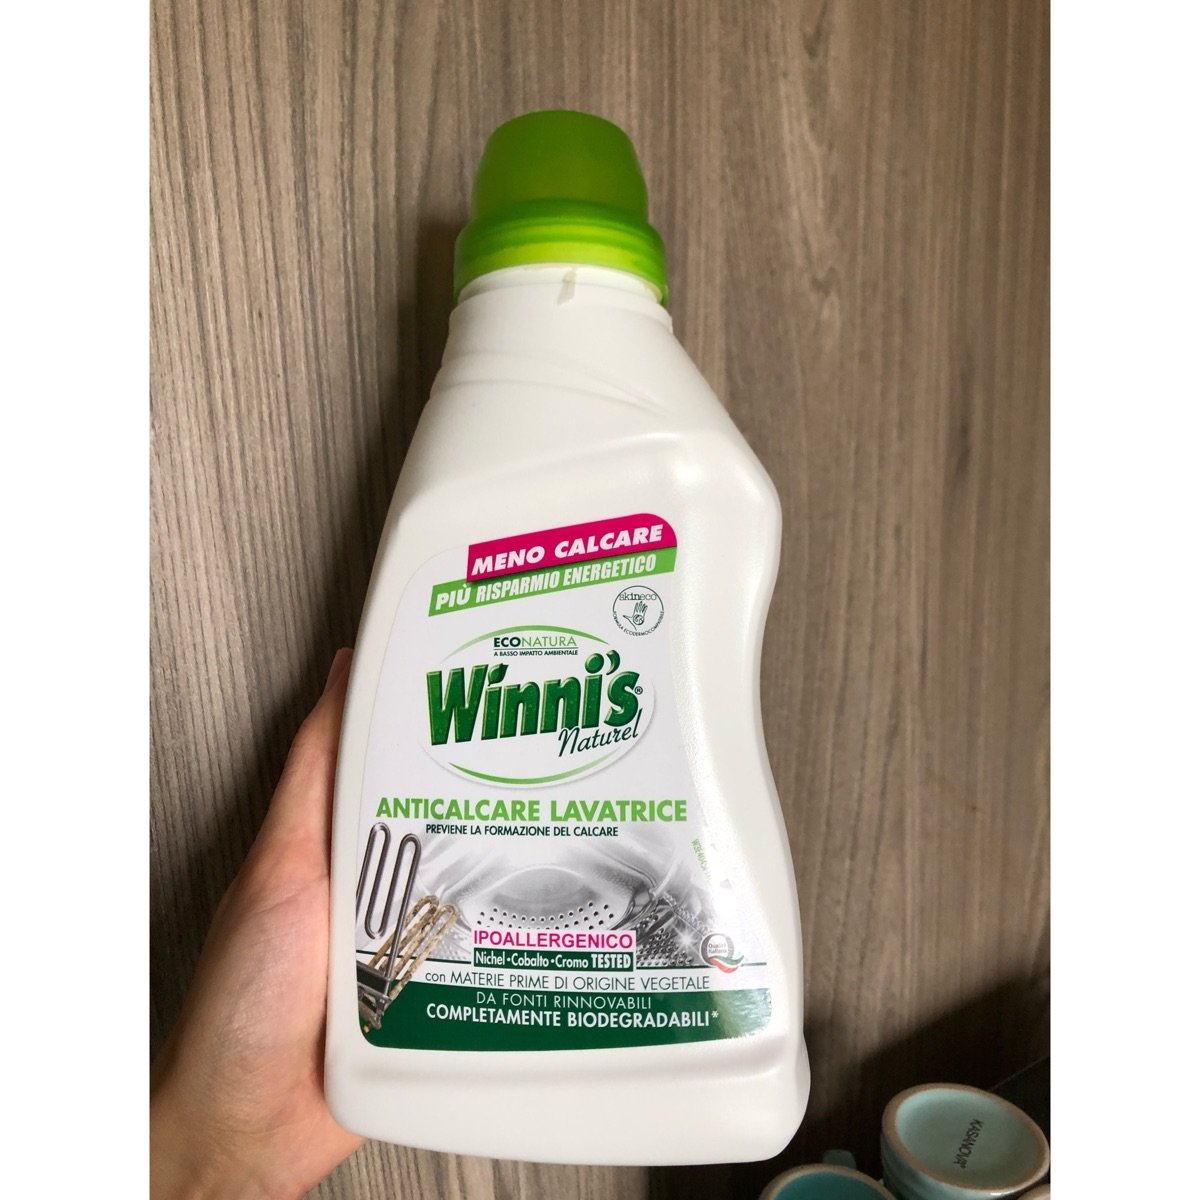 Winni's Anticalcare lavatrice Reviews